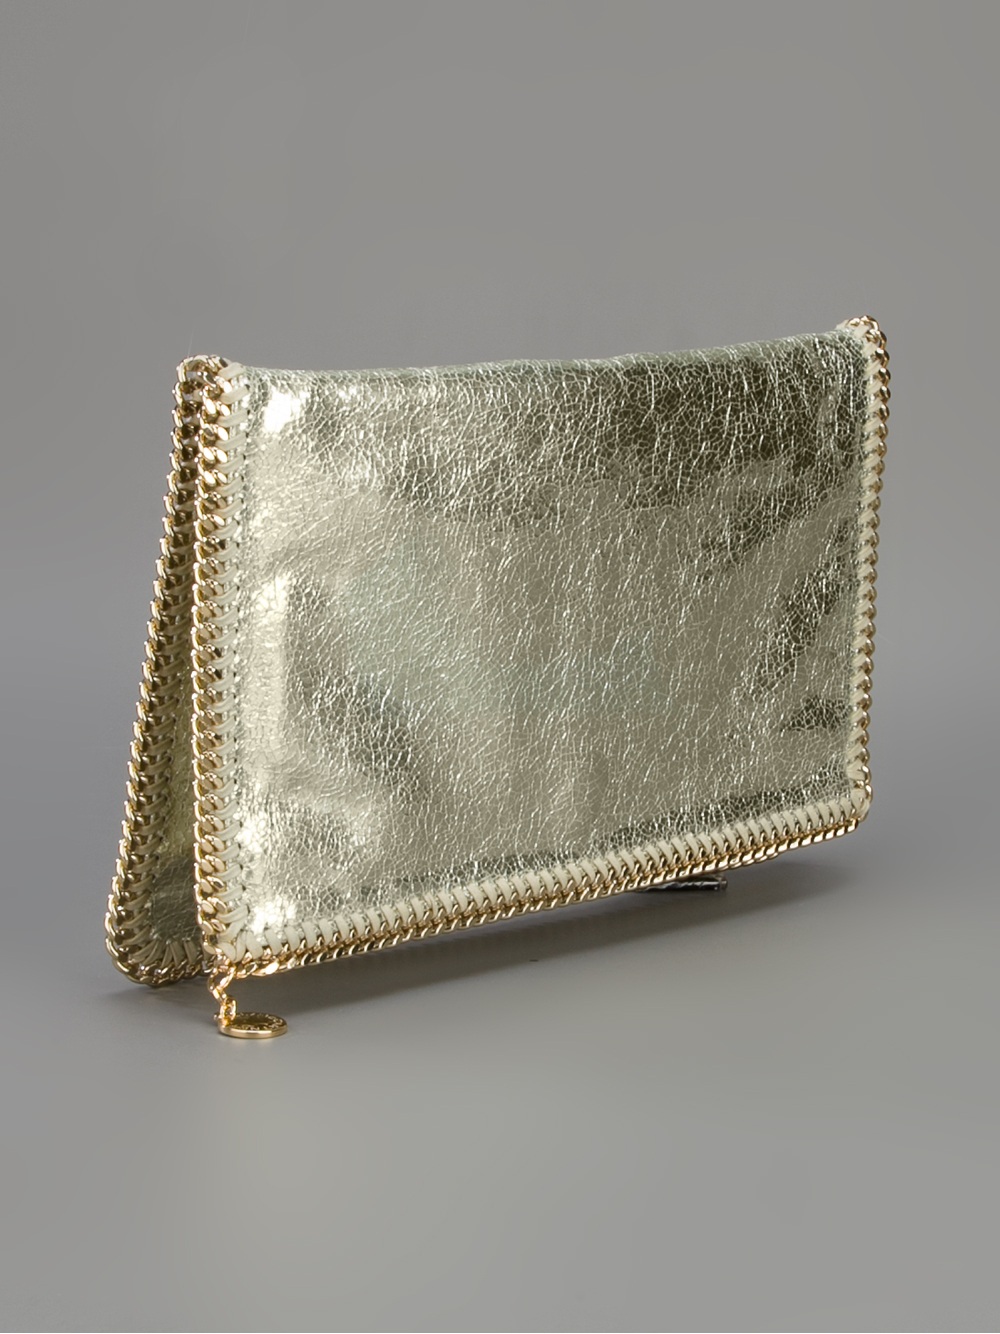 Stella McCartney Falabella Envelope Clutch in Gold (Metallic) | Lyst